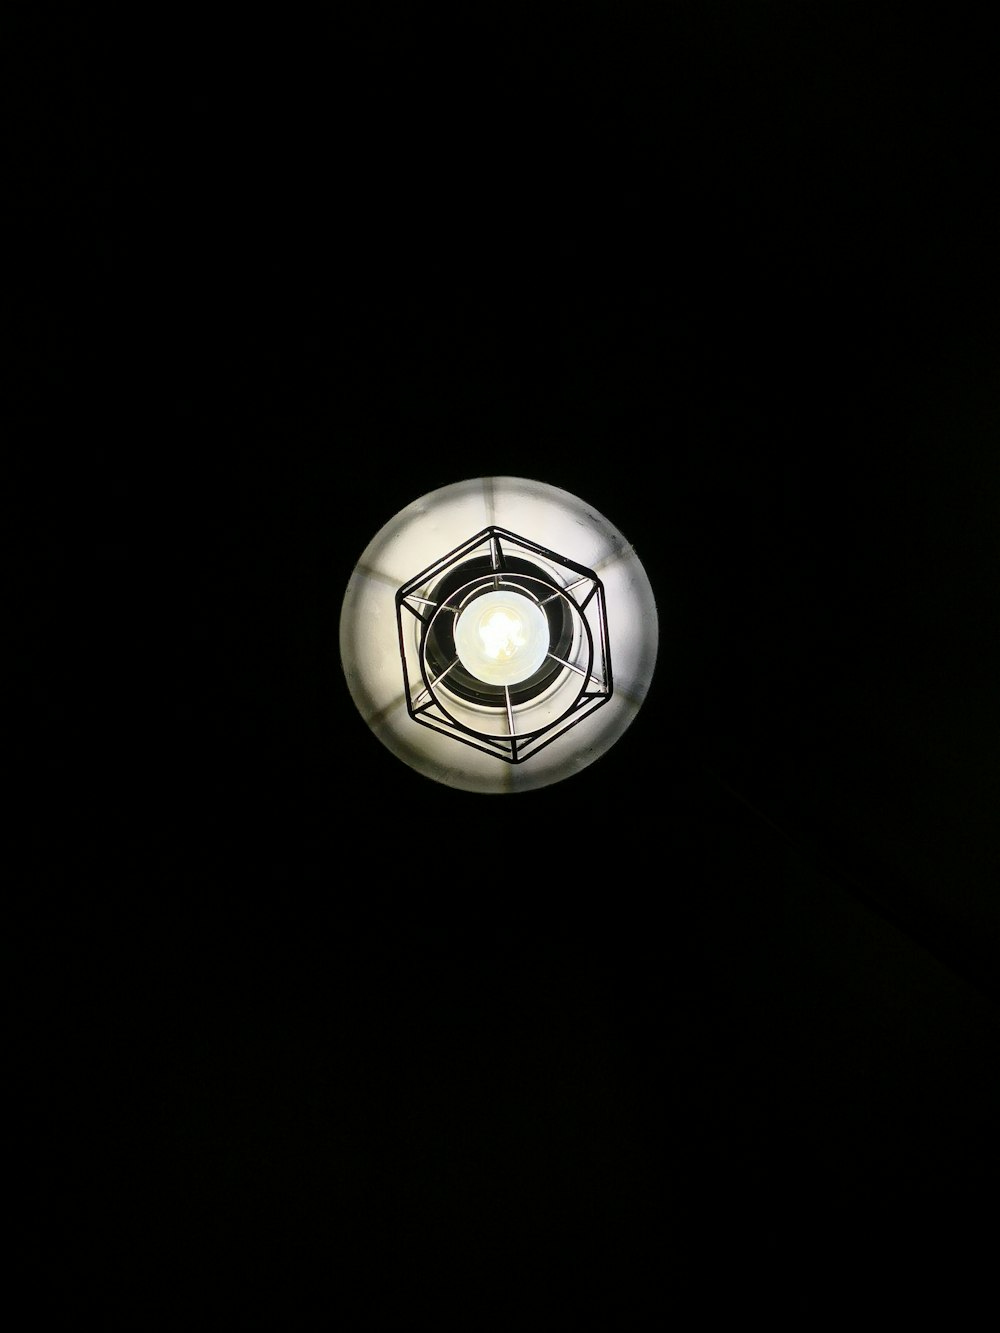 turned-on ceiling light